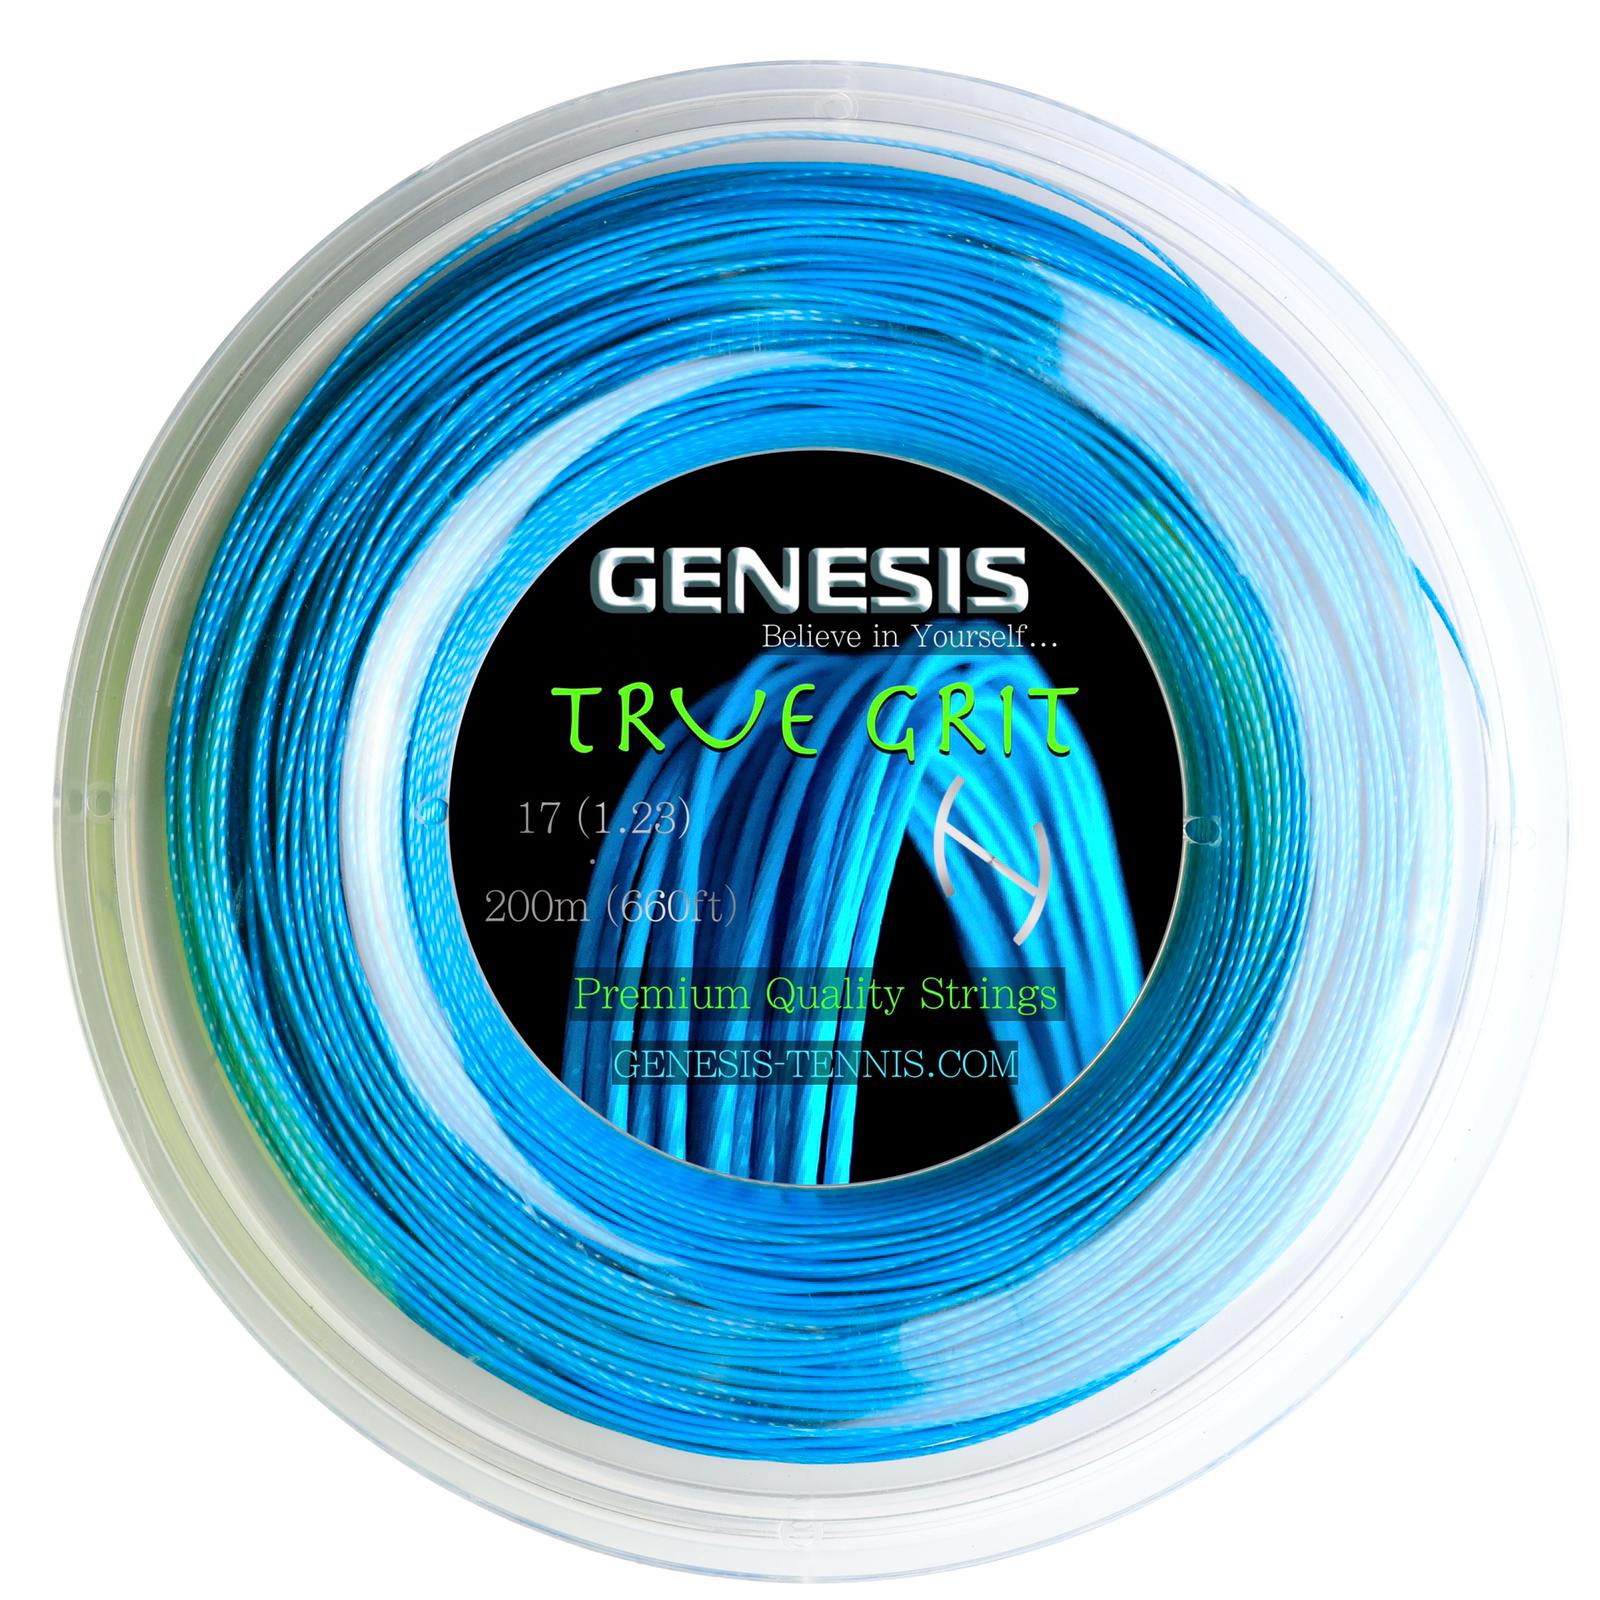 Details about   Genesis White Magic Tennis String Reel 